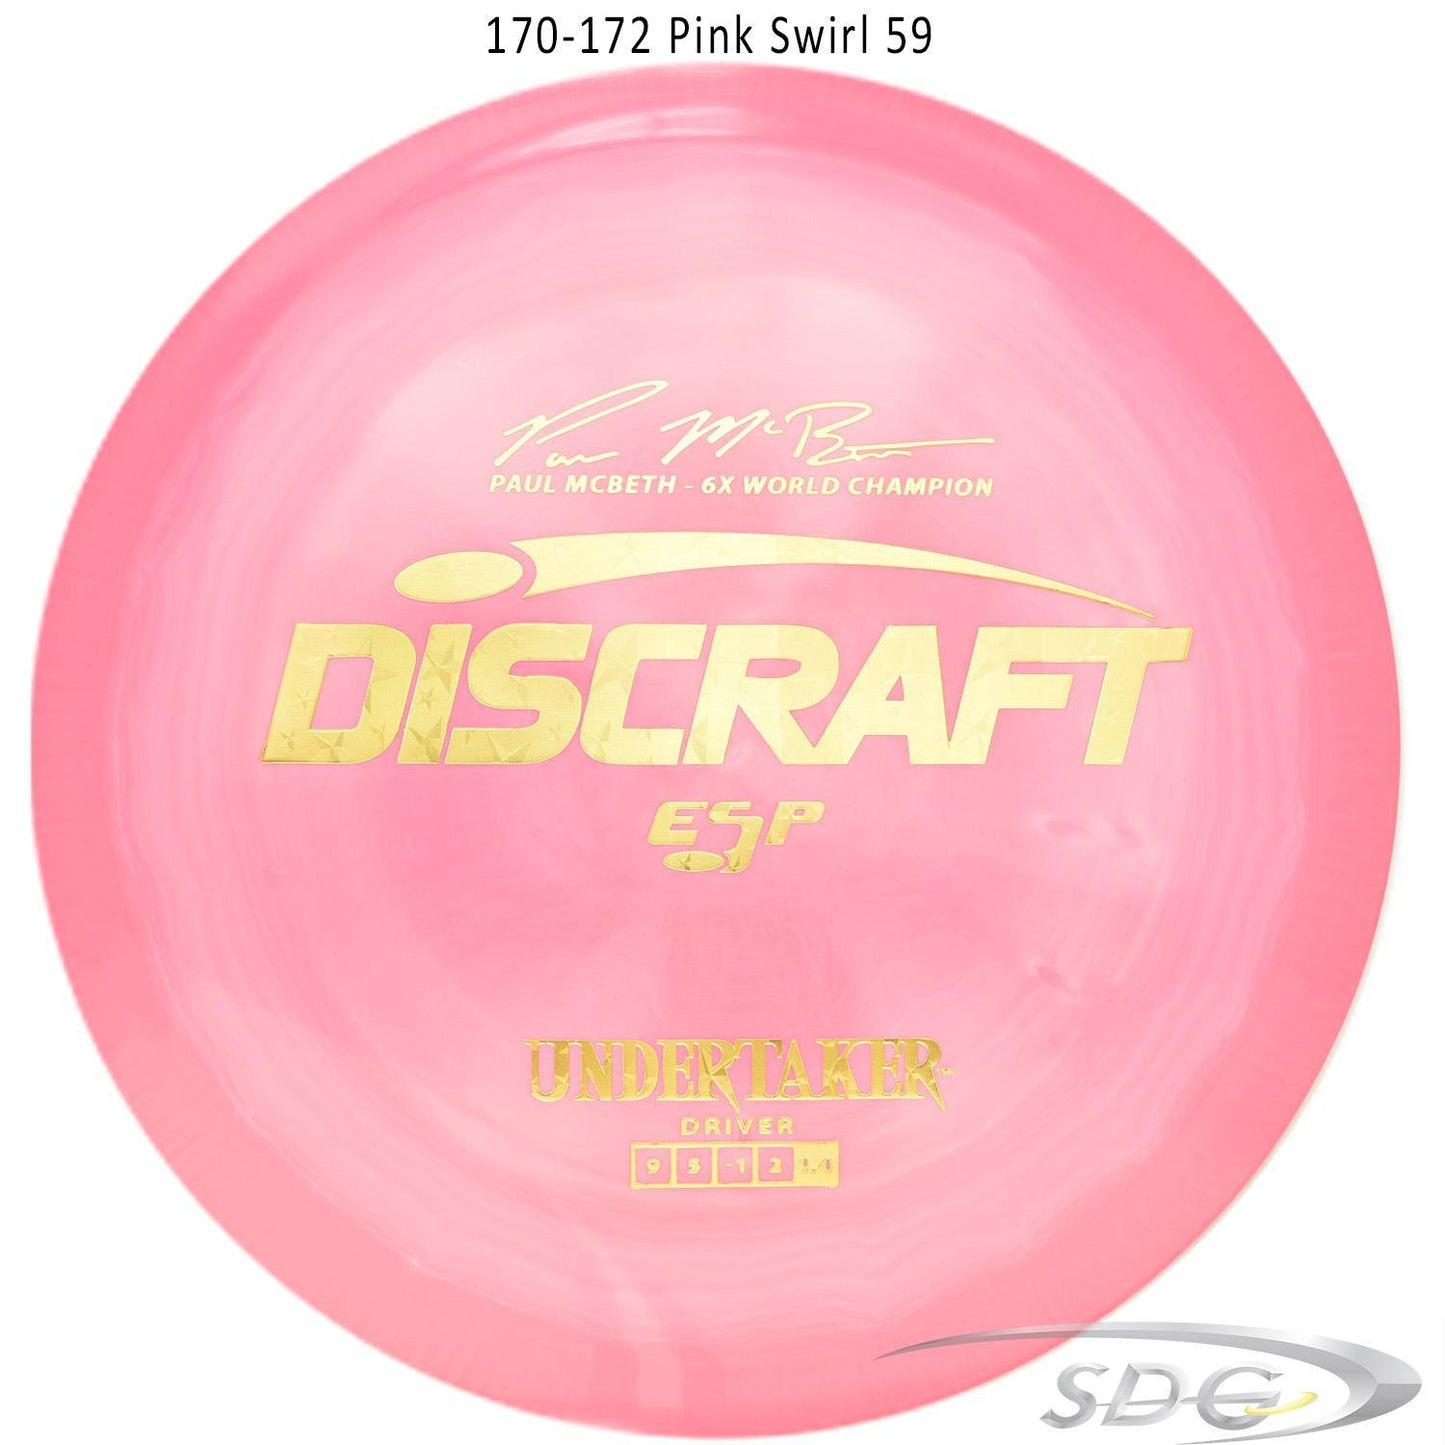 discraft-esp-undertaker-6x-paul-mcbeth-signature-series-disc-golf-distance-driver 170-172 Pink Siwrl 59